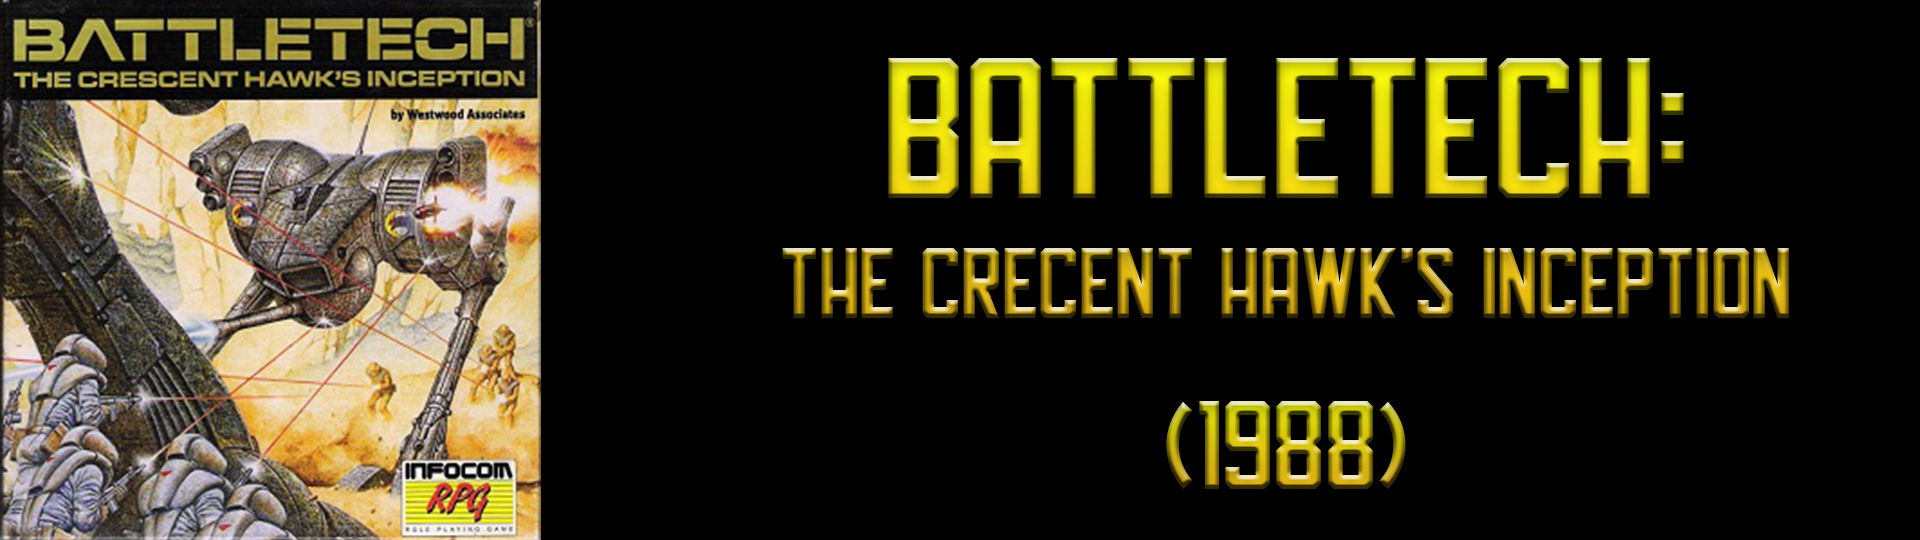 Battletech:  The Crescent Hawk's Inception